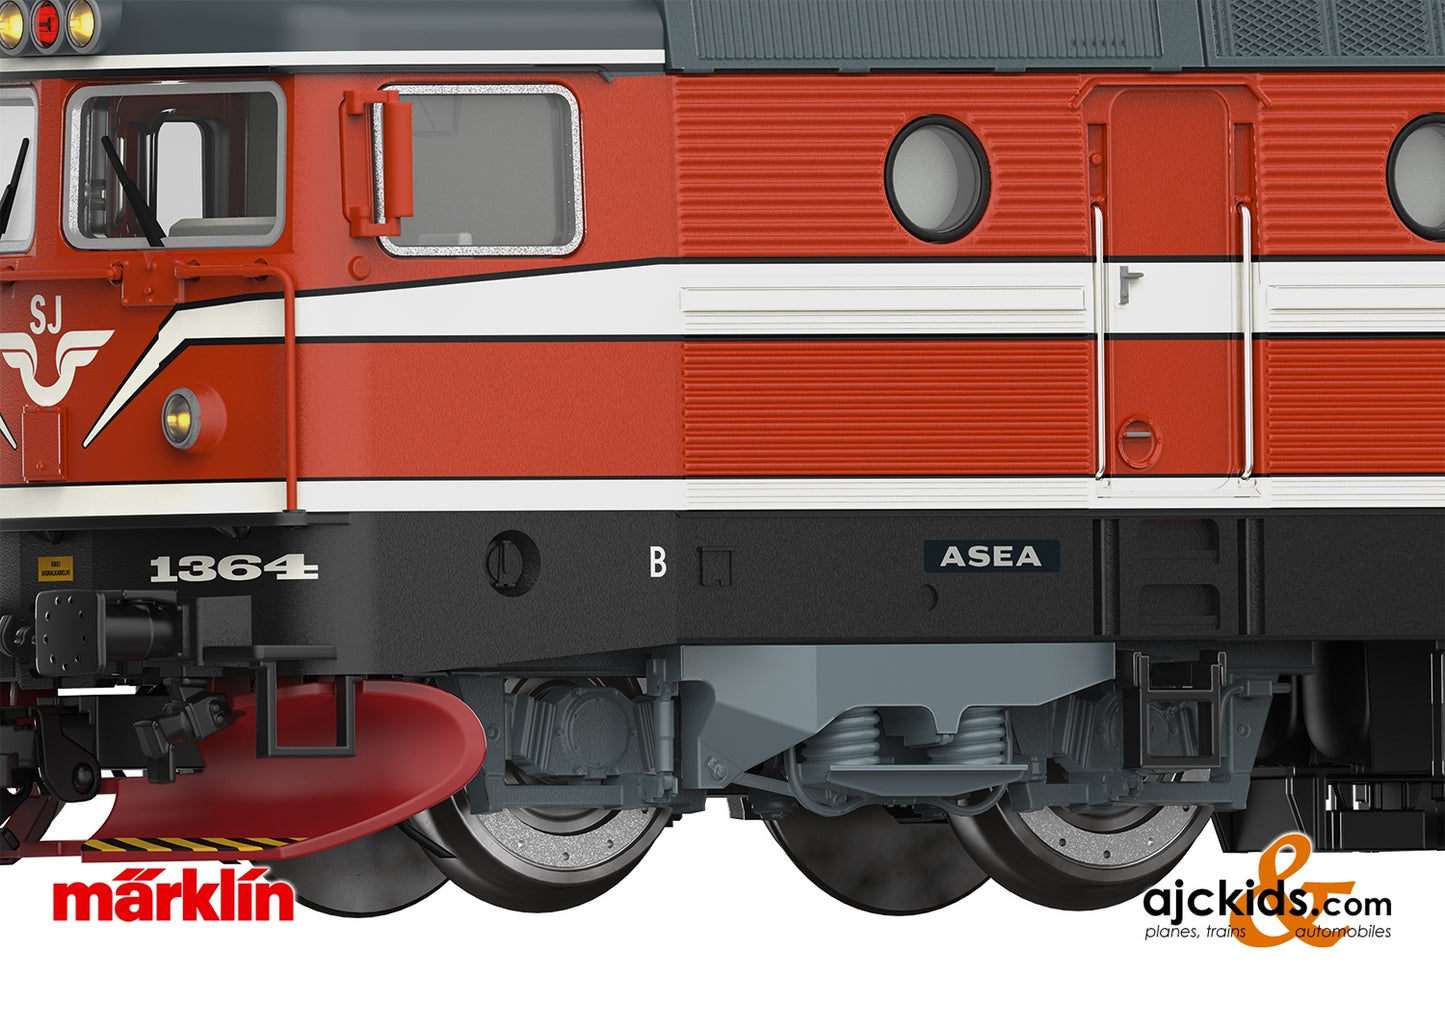 Marklin 39281 - Class Rc 5 Electric Locomotive  at Ajckids.com